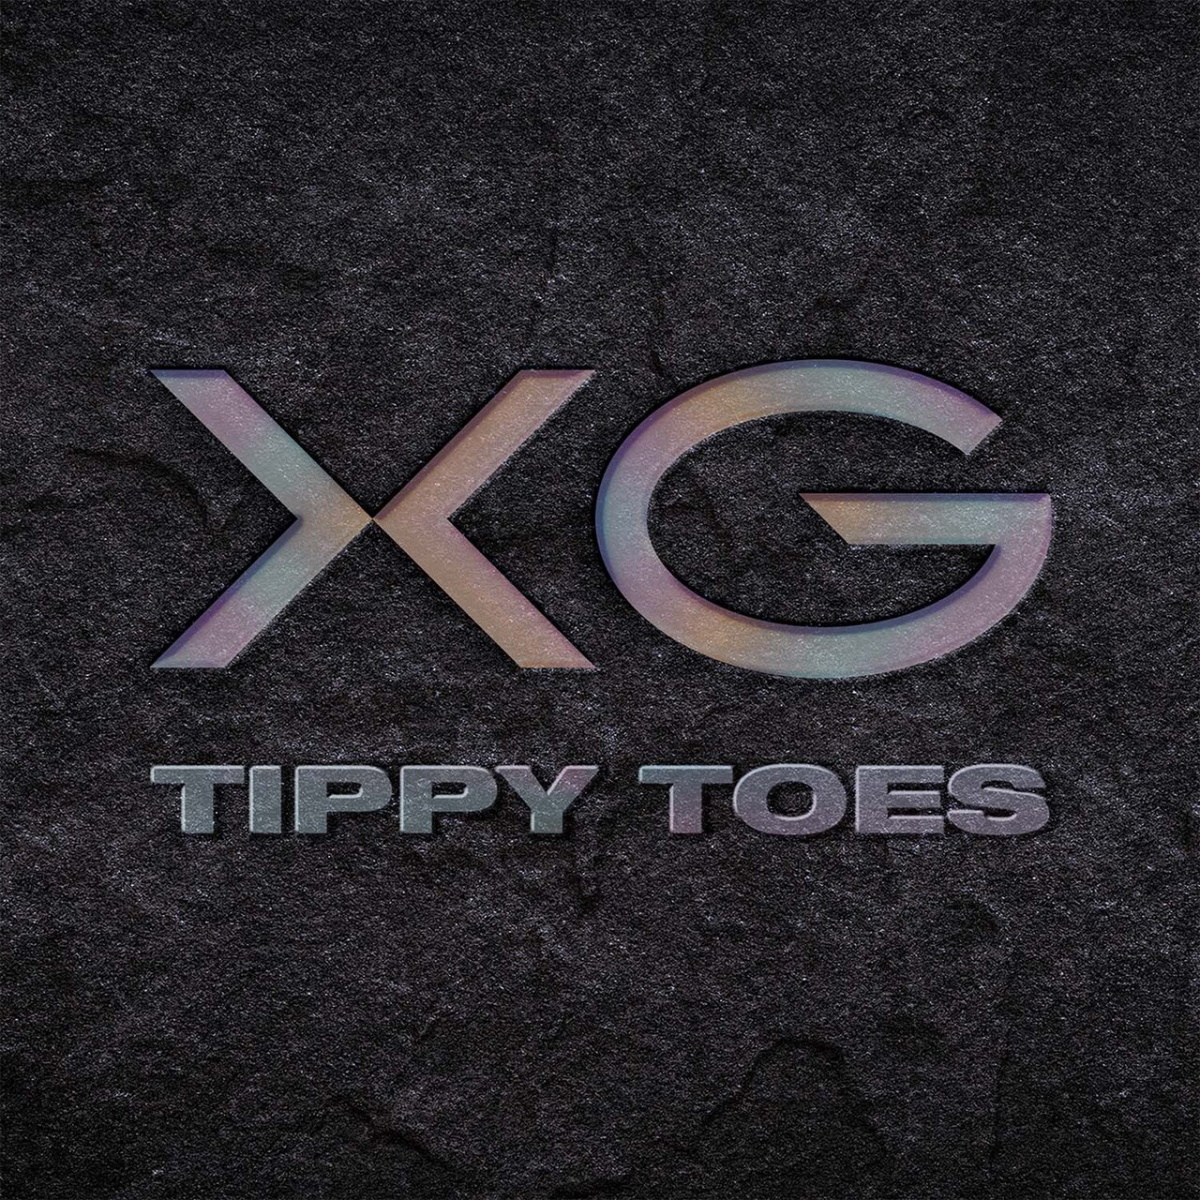 『XG - Tippy Toes』収録の『Tippy Toes』ジャケット